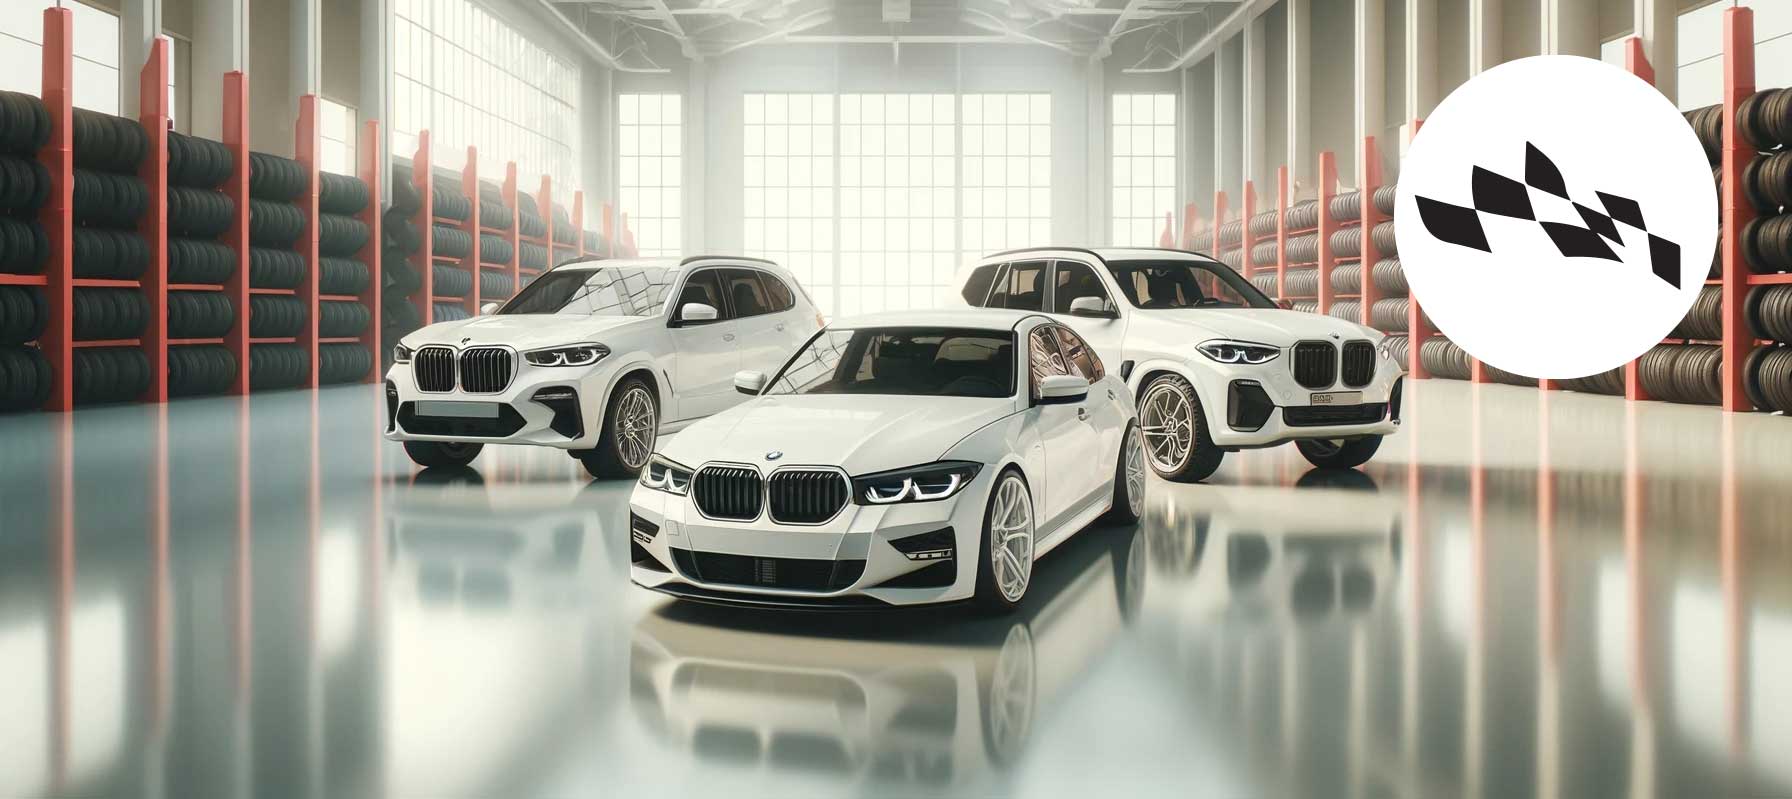 BMW tires warehouse image